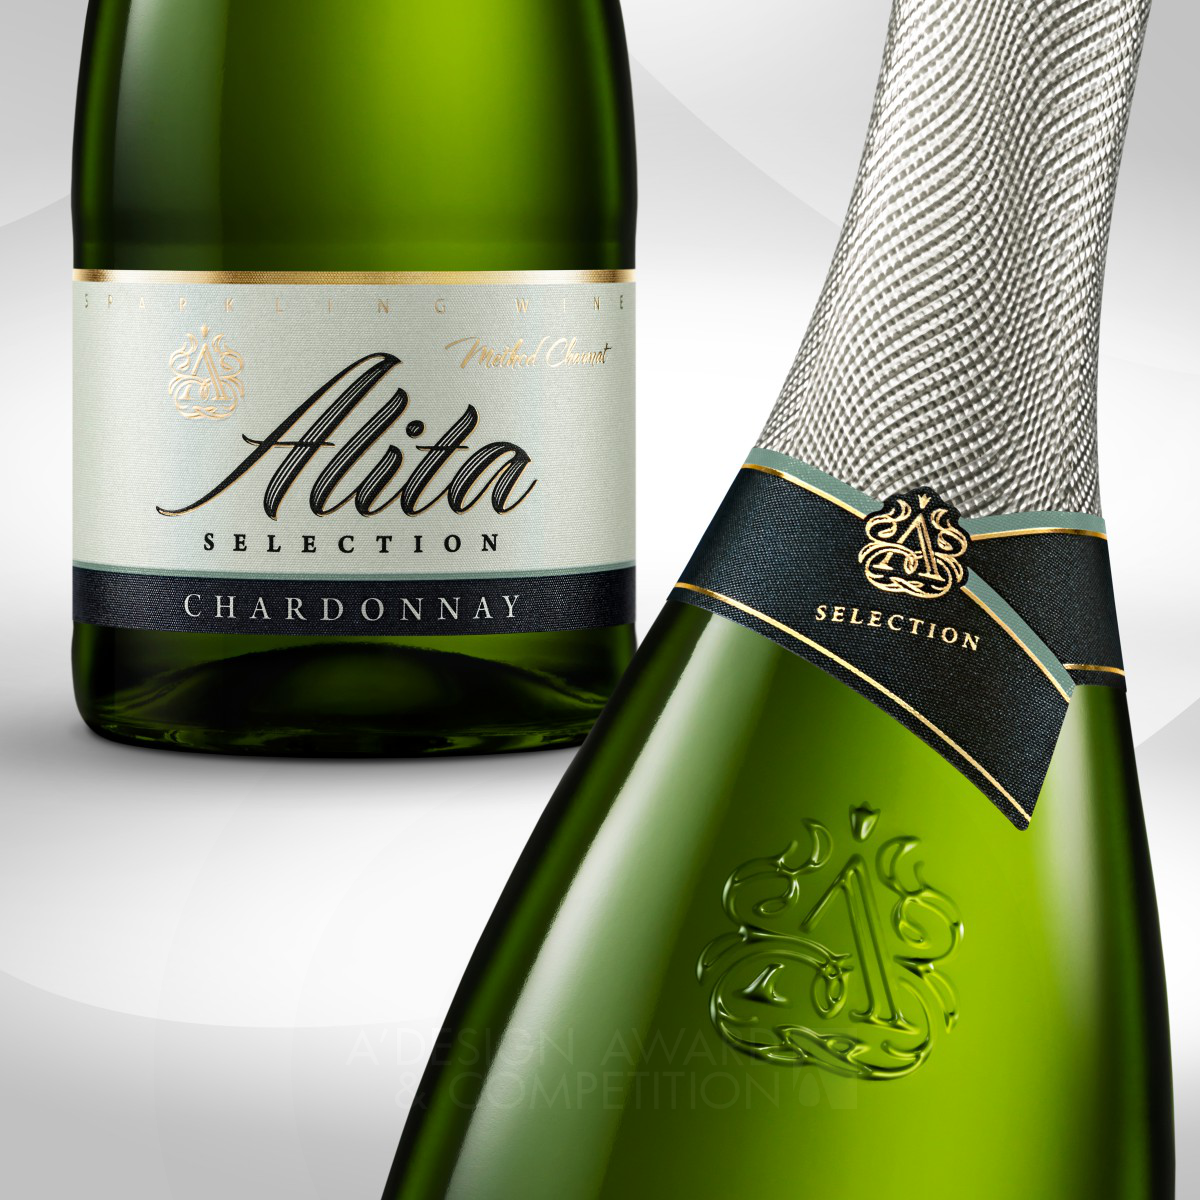 Alita Bottle design and labels by Studija Creata Silver Packaging Design Award Winner 2017 